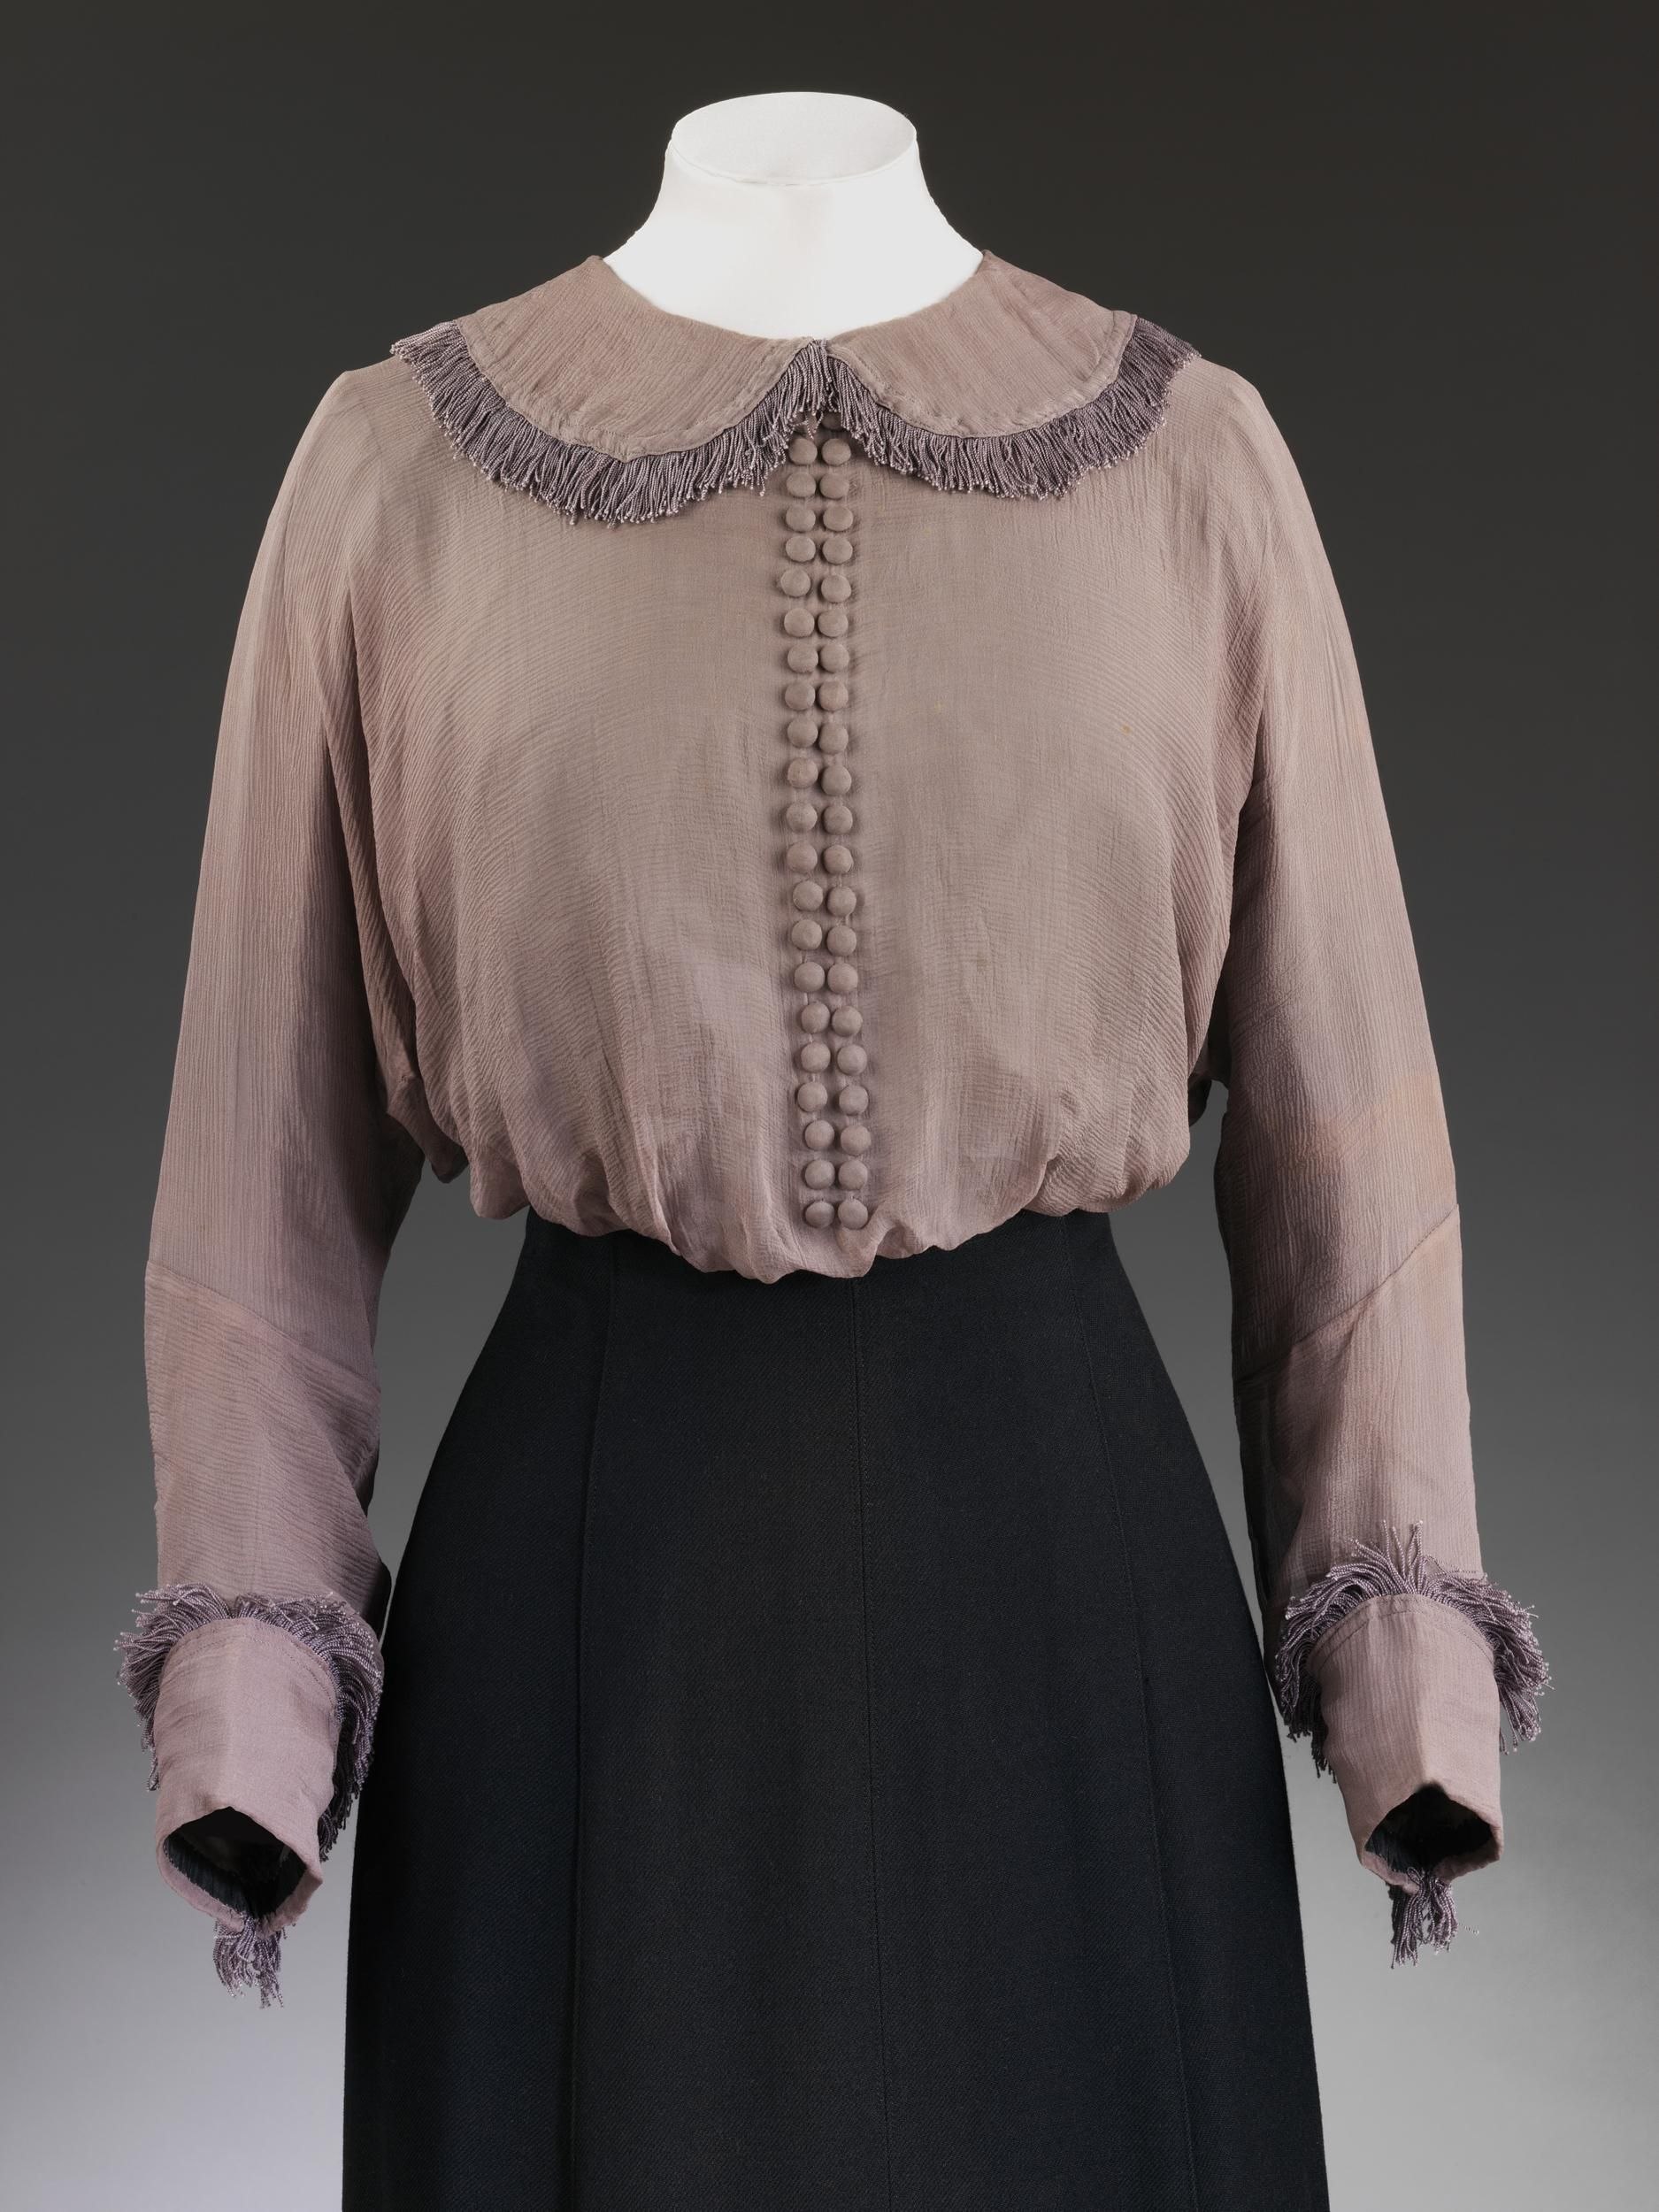 Легкая блузка 19 века. Эдвардианская мода жабо. Блуза 1910е мода. Винтажные блузки. Блузки в историческом стиле.